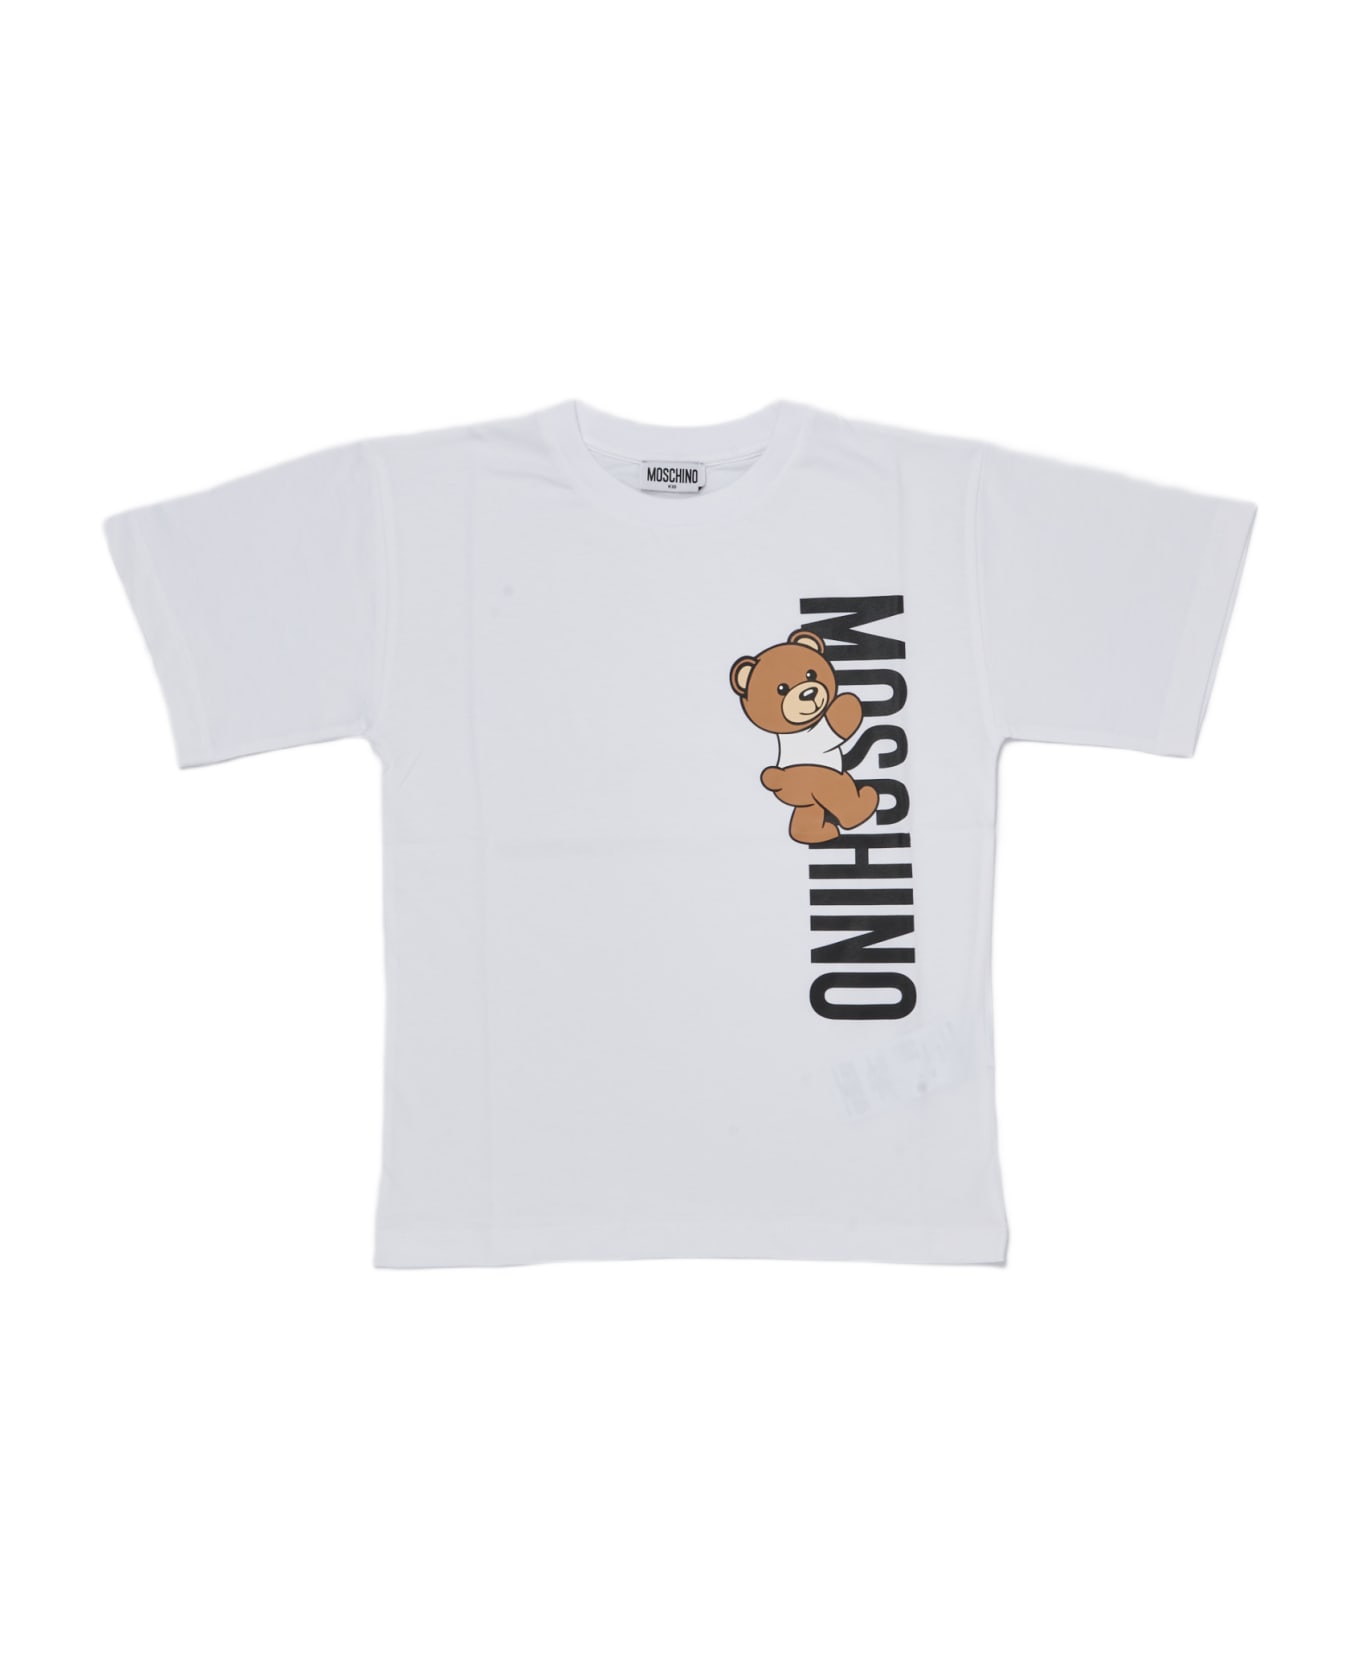 Moschino T-shirt T-shirt - BIANCO OTTICO